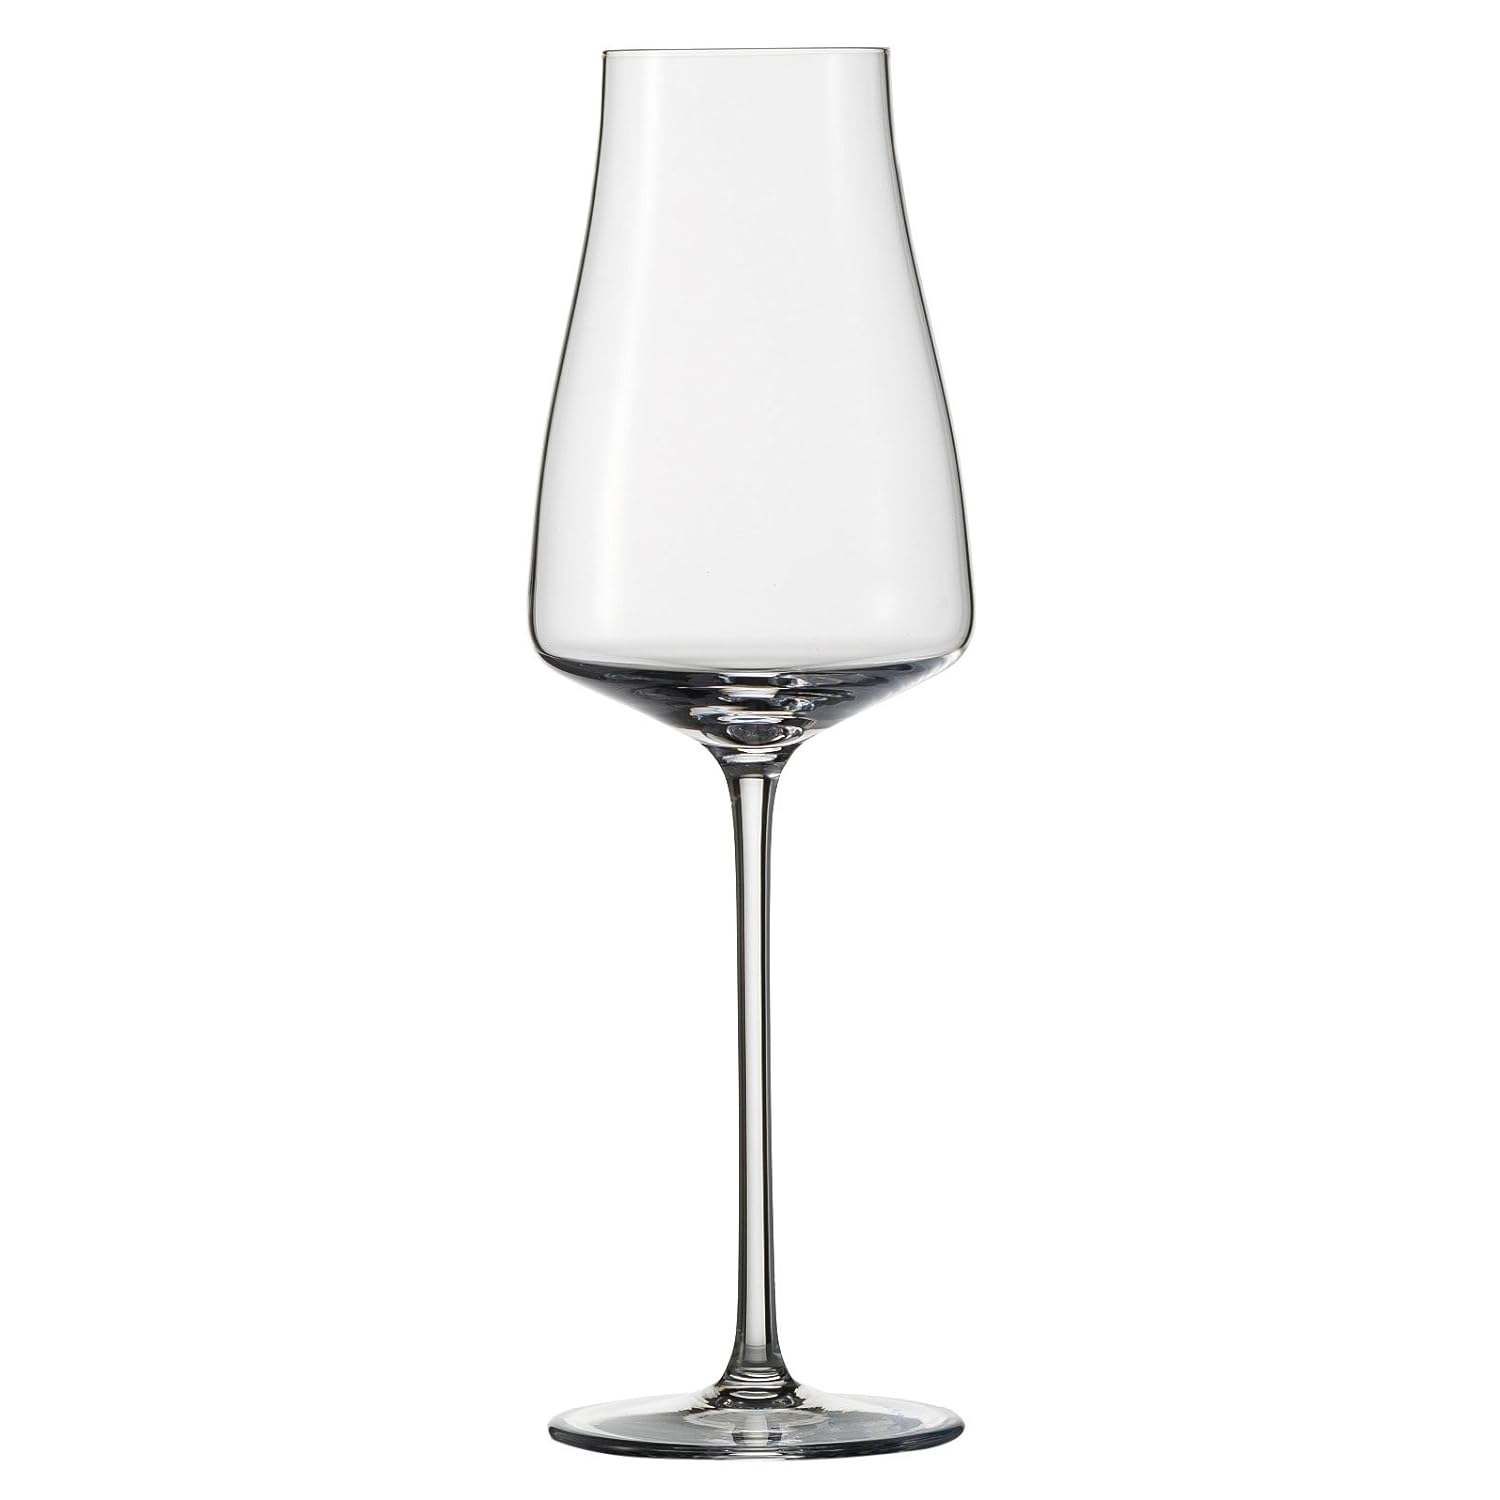 Zwiesel 1872 118235 Classics Champagne Wine Glass, Crystal Glass, Clear, 24 x 7.8 x 24 cm 2 Units